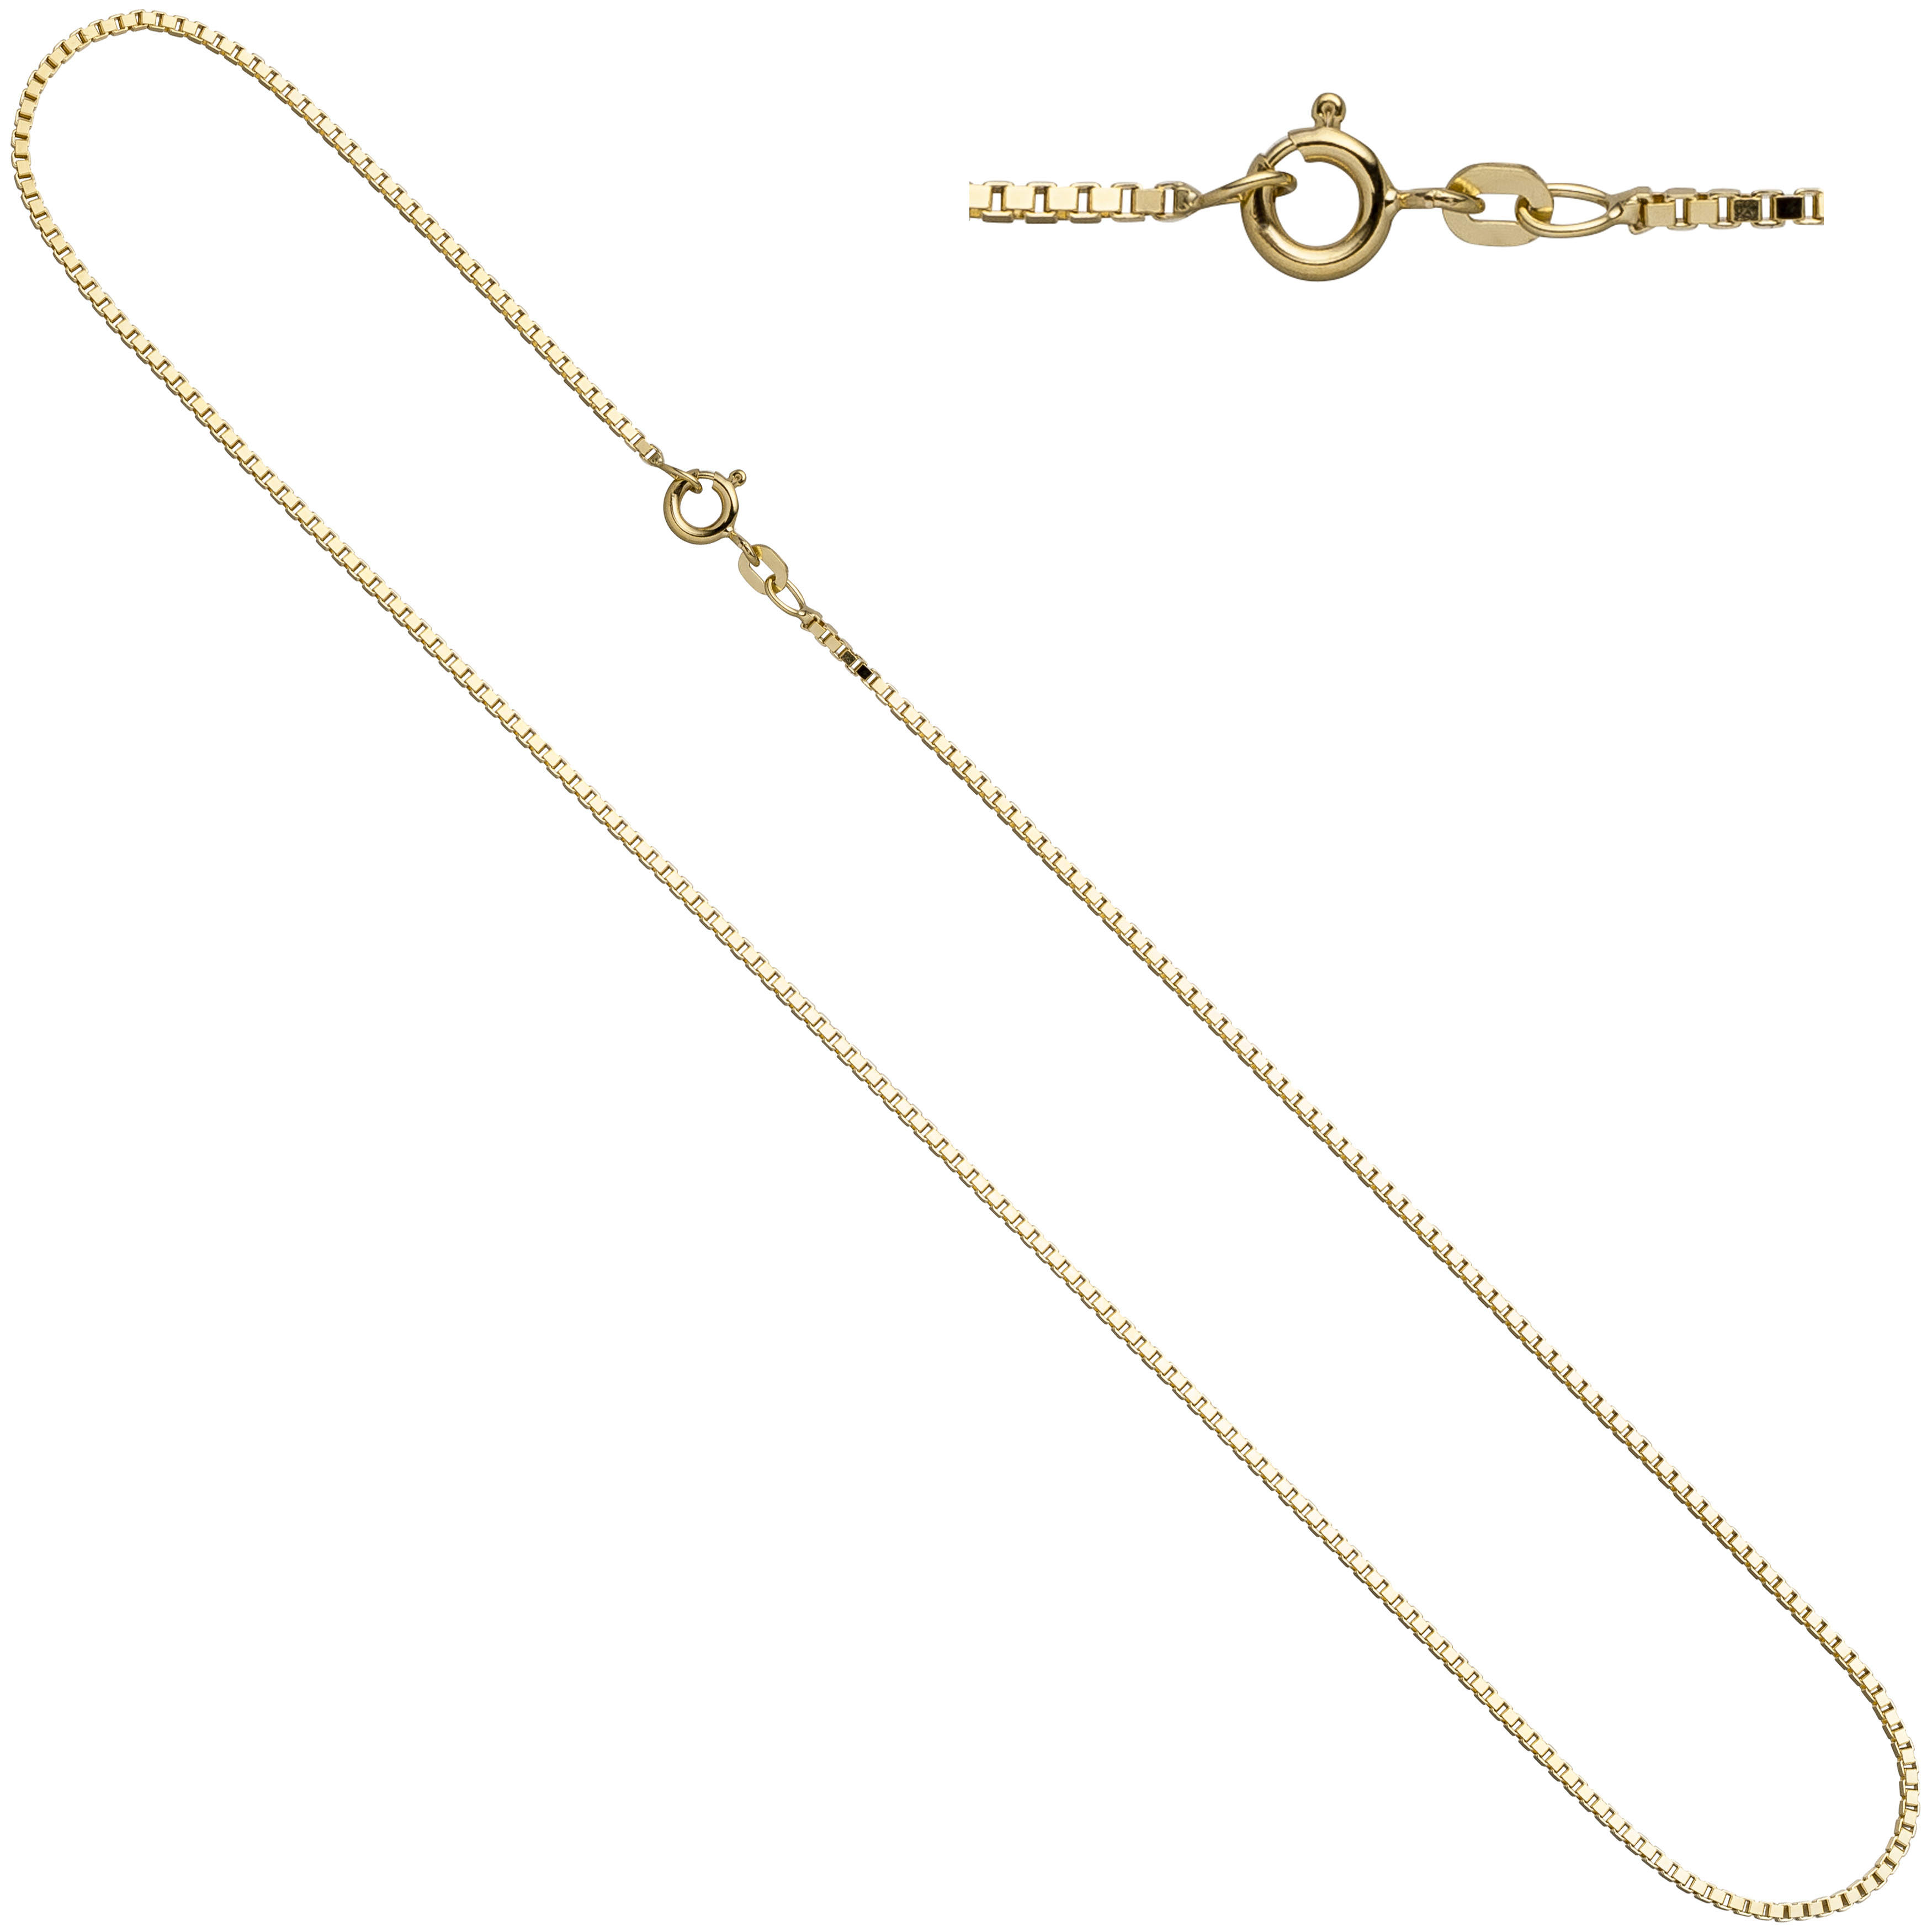 Venezianerkette 333 Gelbgold 1,0 mm 40 cm Gold Kette Halskette Federring